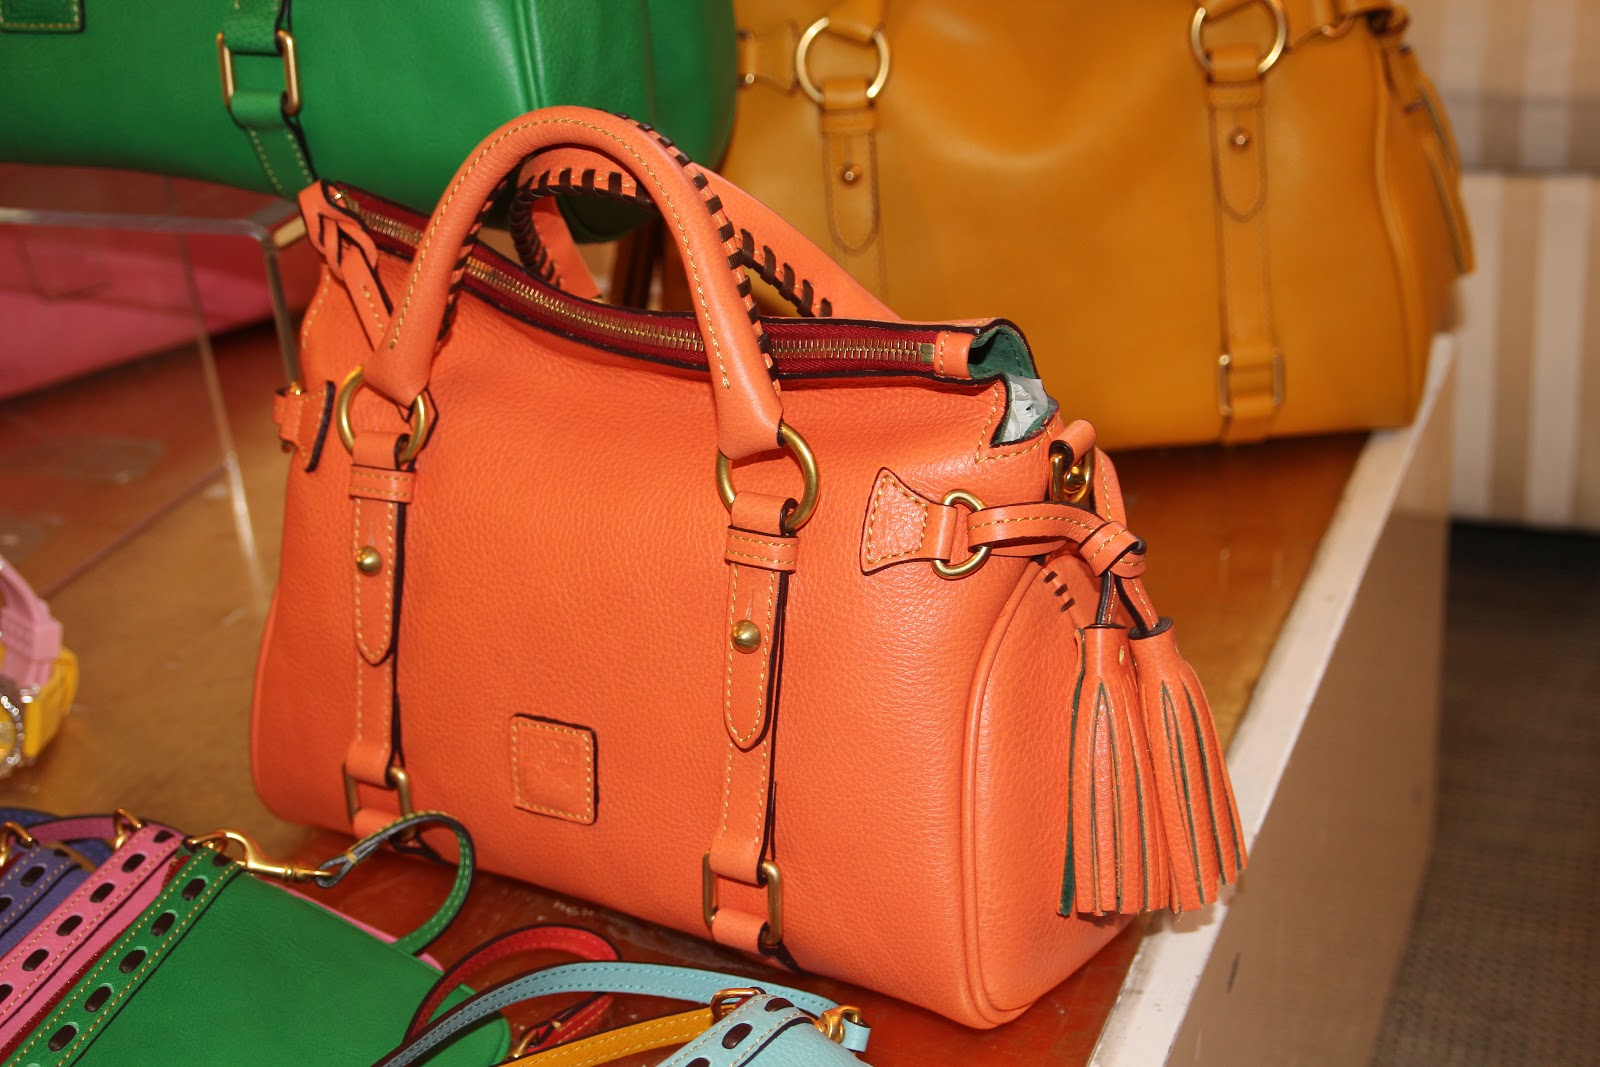 Dooney & Bourke Nylon Shopper Tote Bag Brand New W/ Tags!! - Organic Olivia